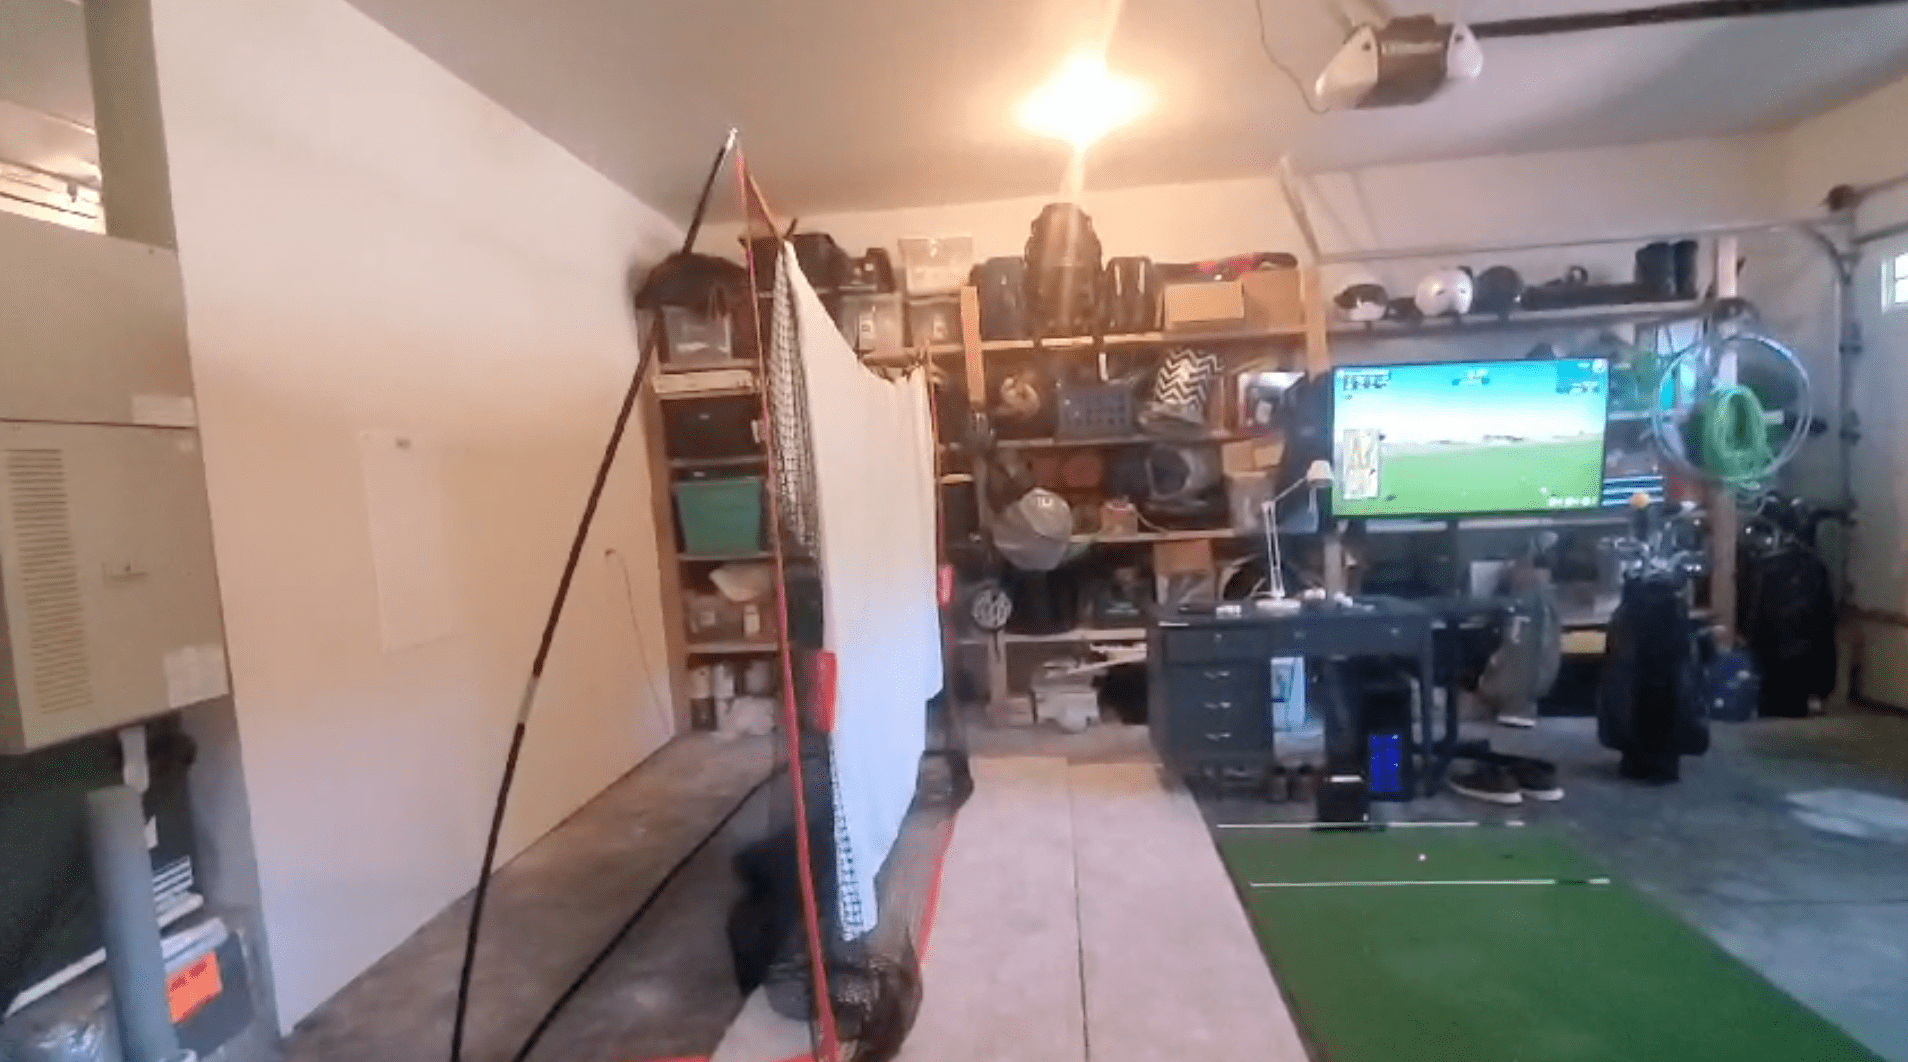 SkyTrak Golf Simulator Set Up in Garage